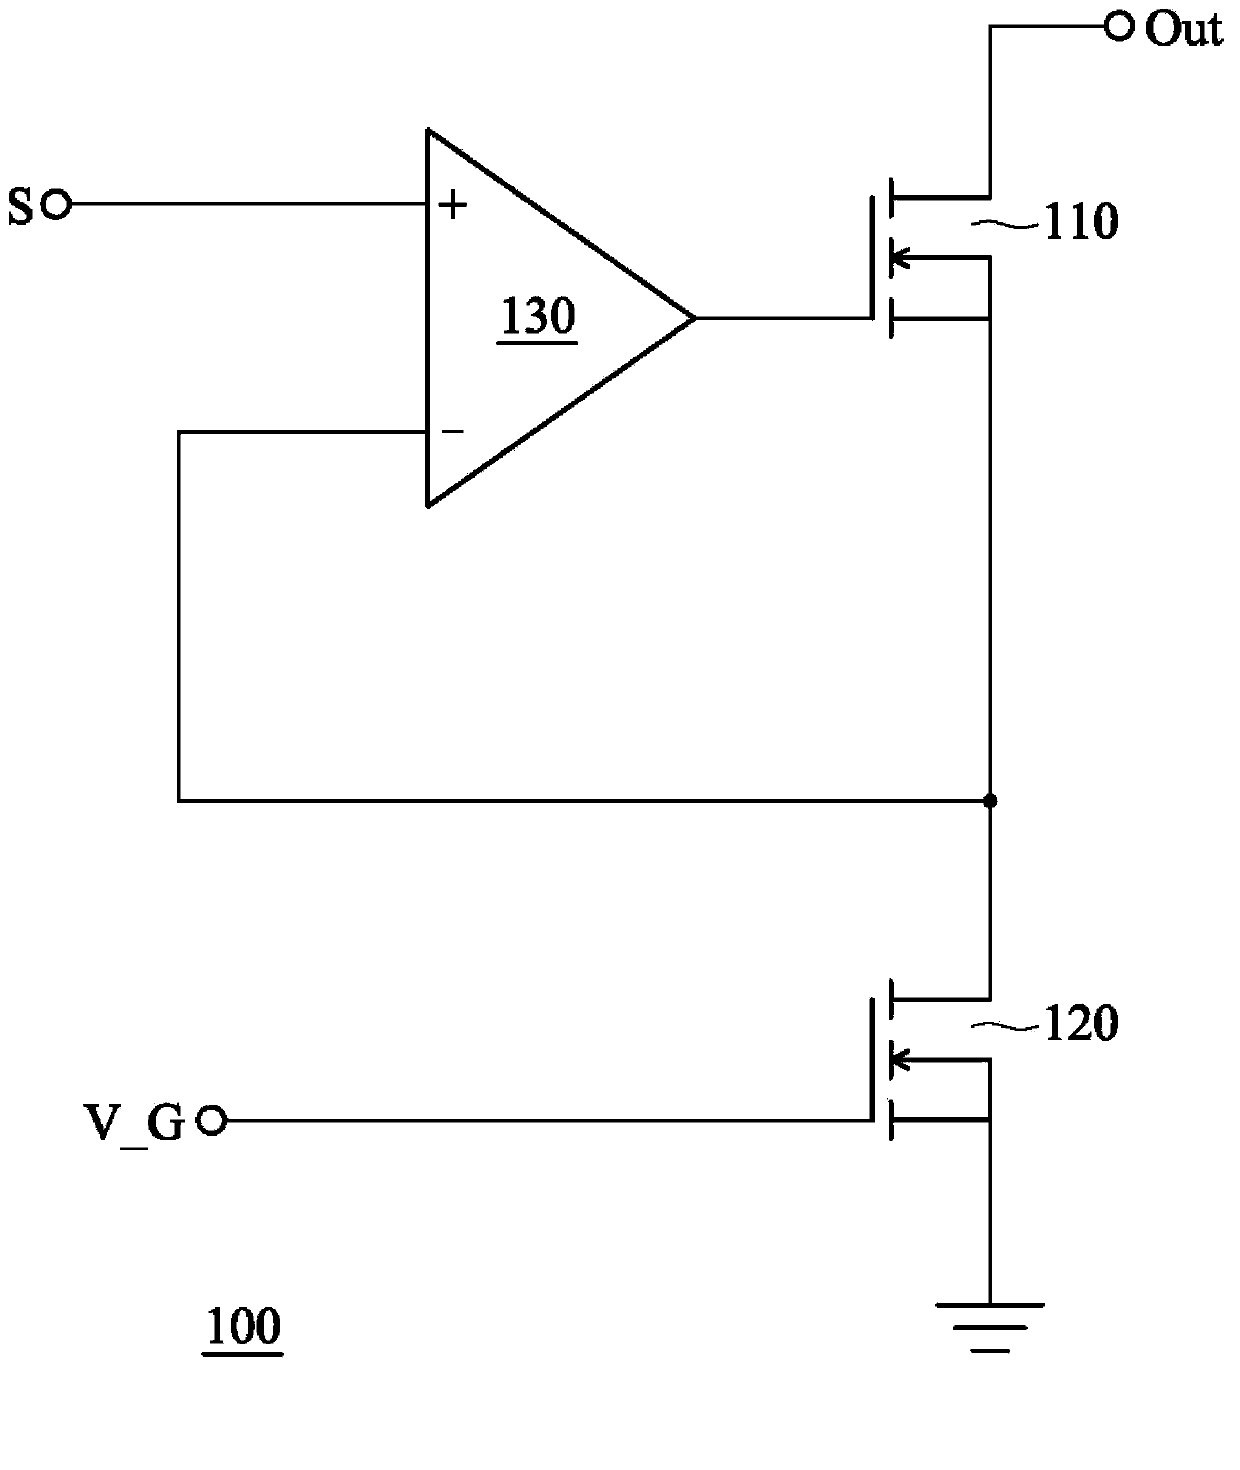 Light-emitting diode drive circuit